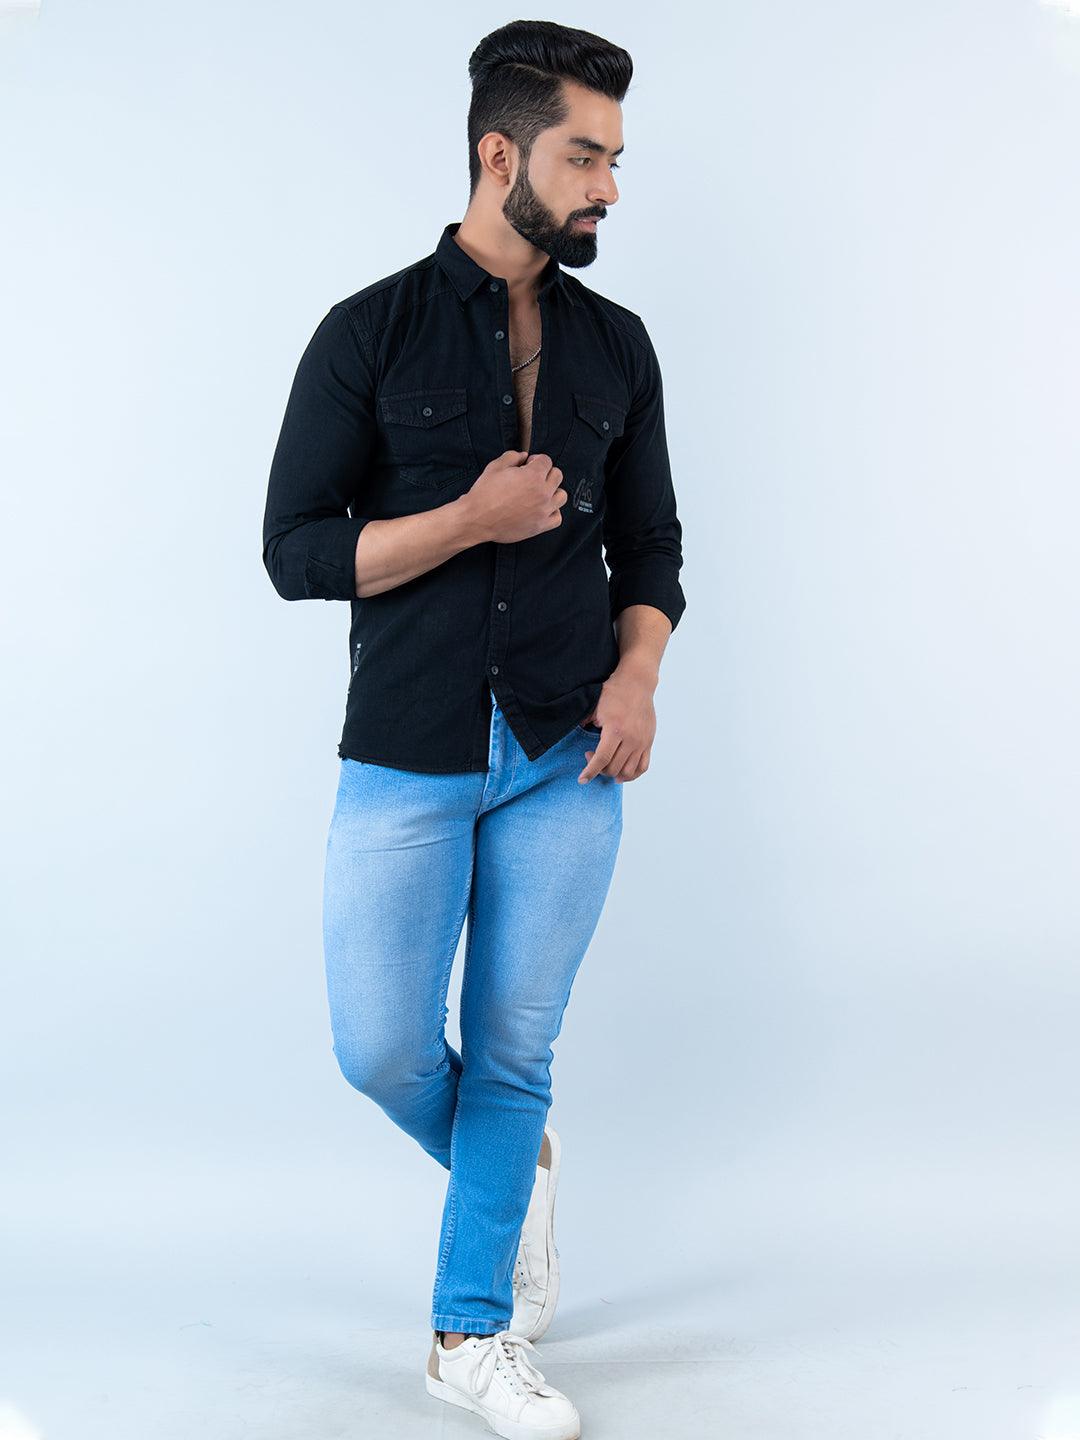 Male Black Shirts Black Jeans White Stock Photo 1500302285 | Shutterstock